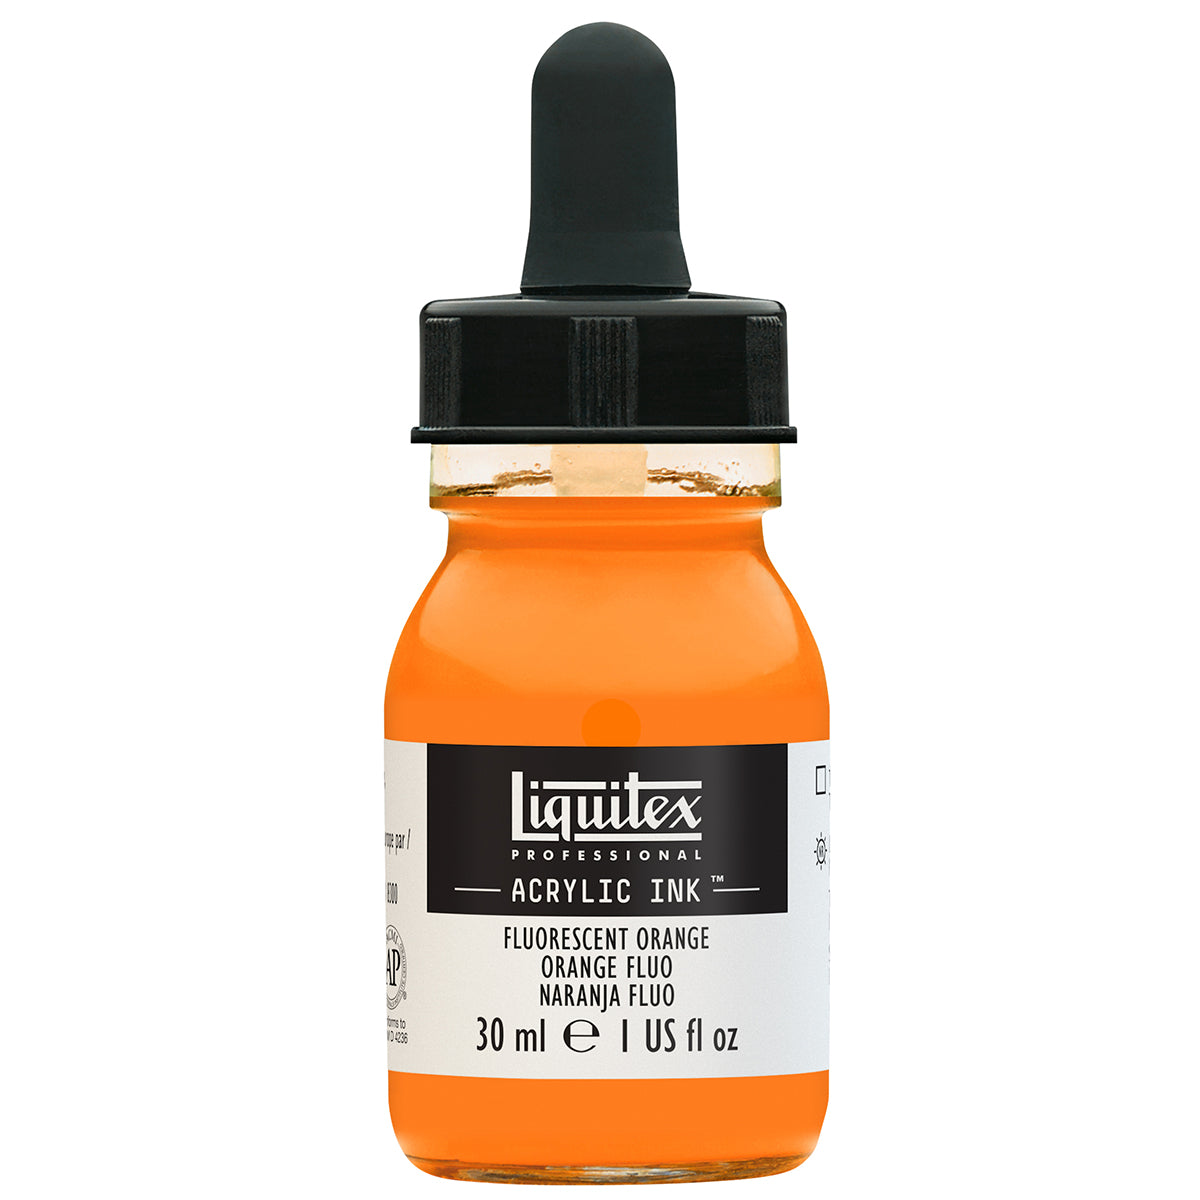 Liquitex - Acrylic Ink - 30ml Fluorescent Orange